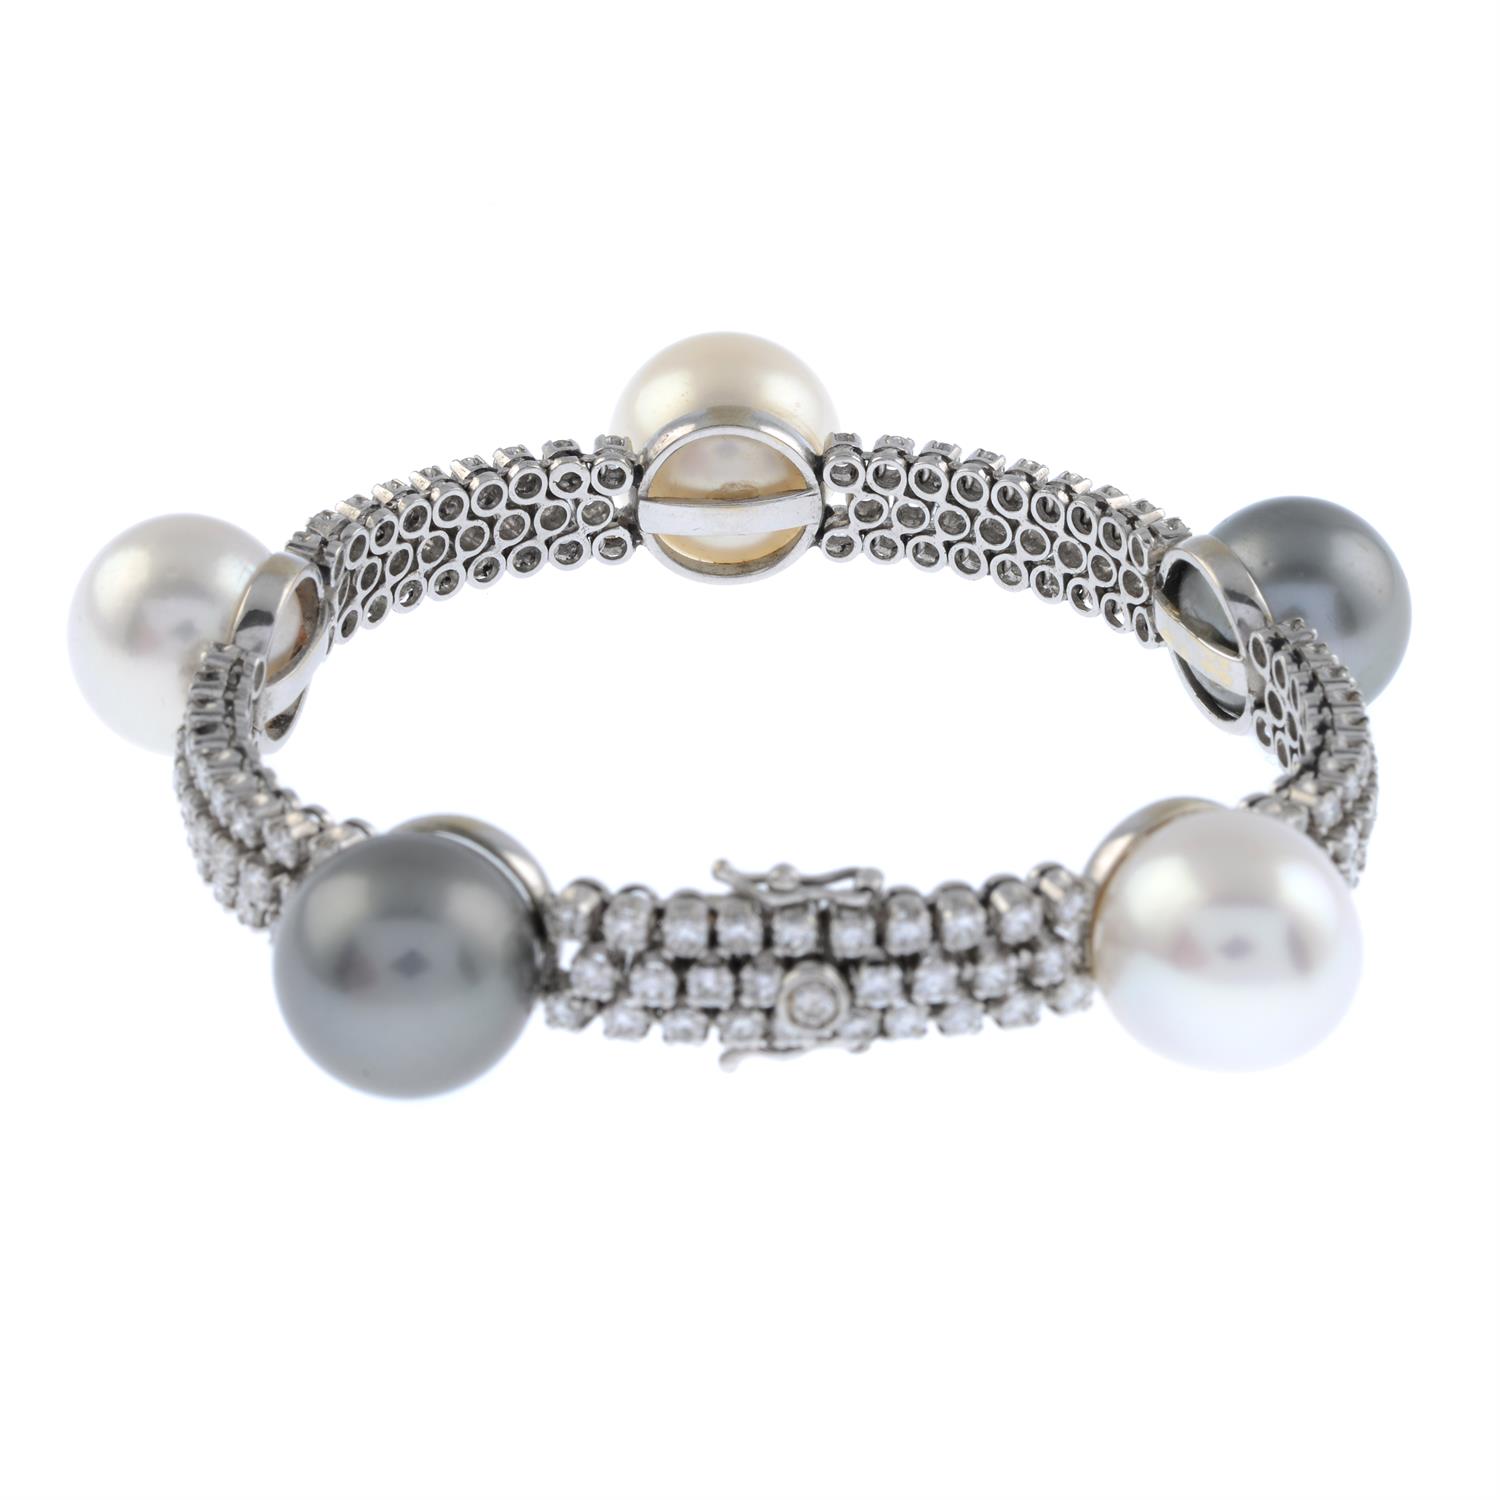 Pearl and diamond bracelet - Image 3 of 4